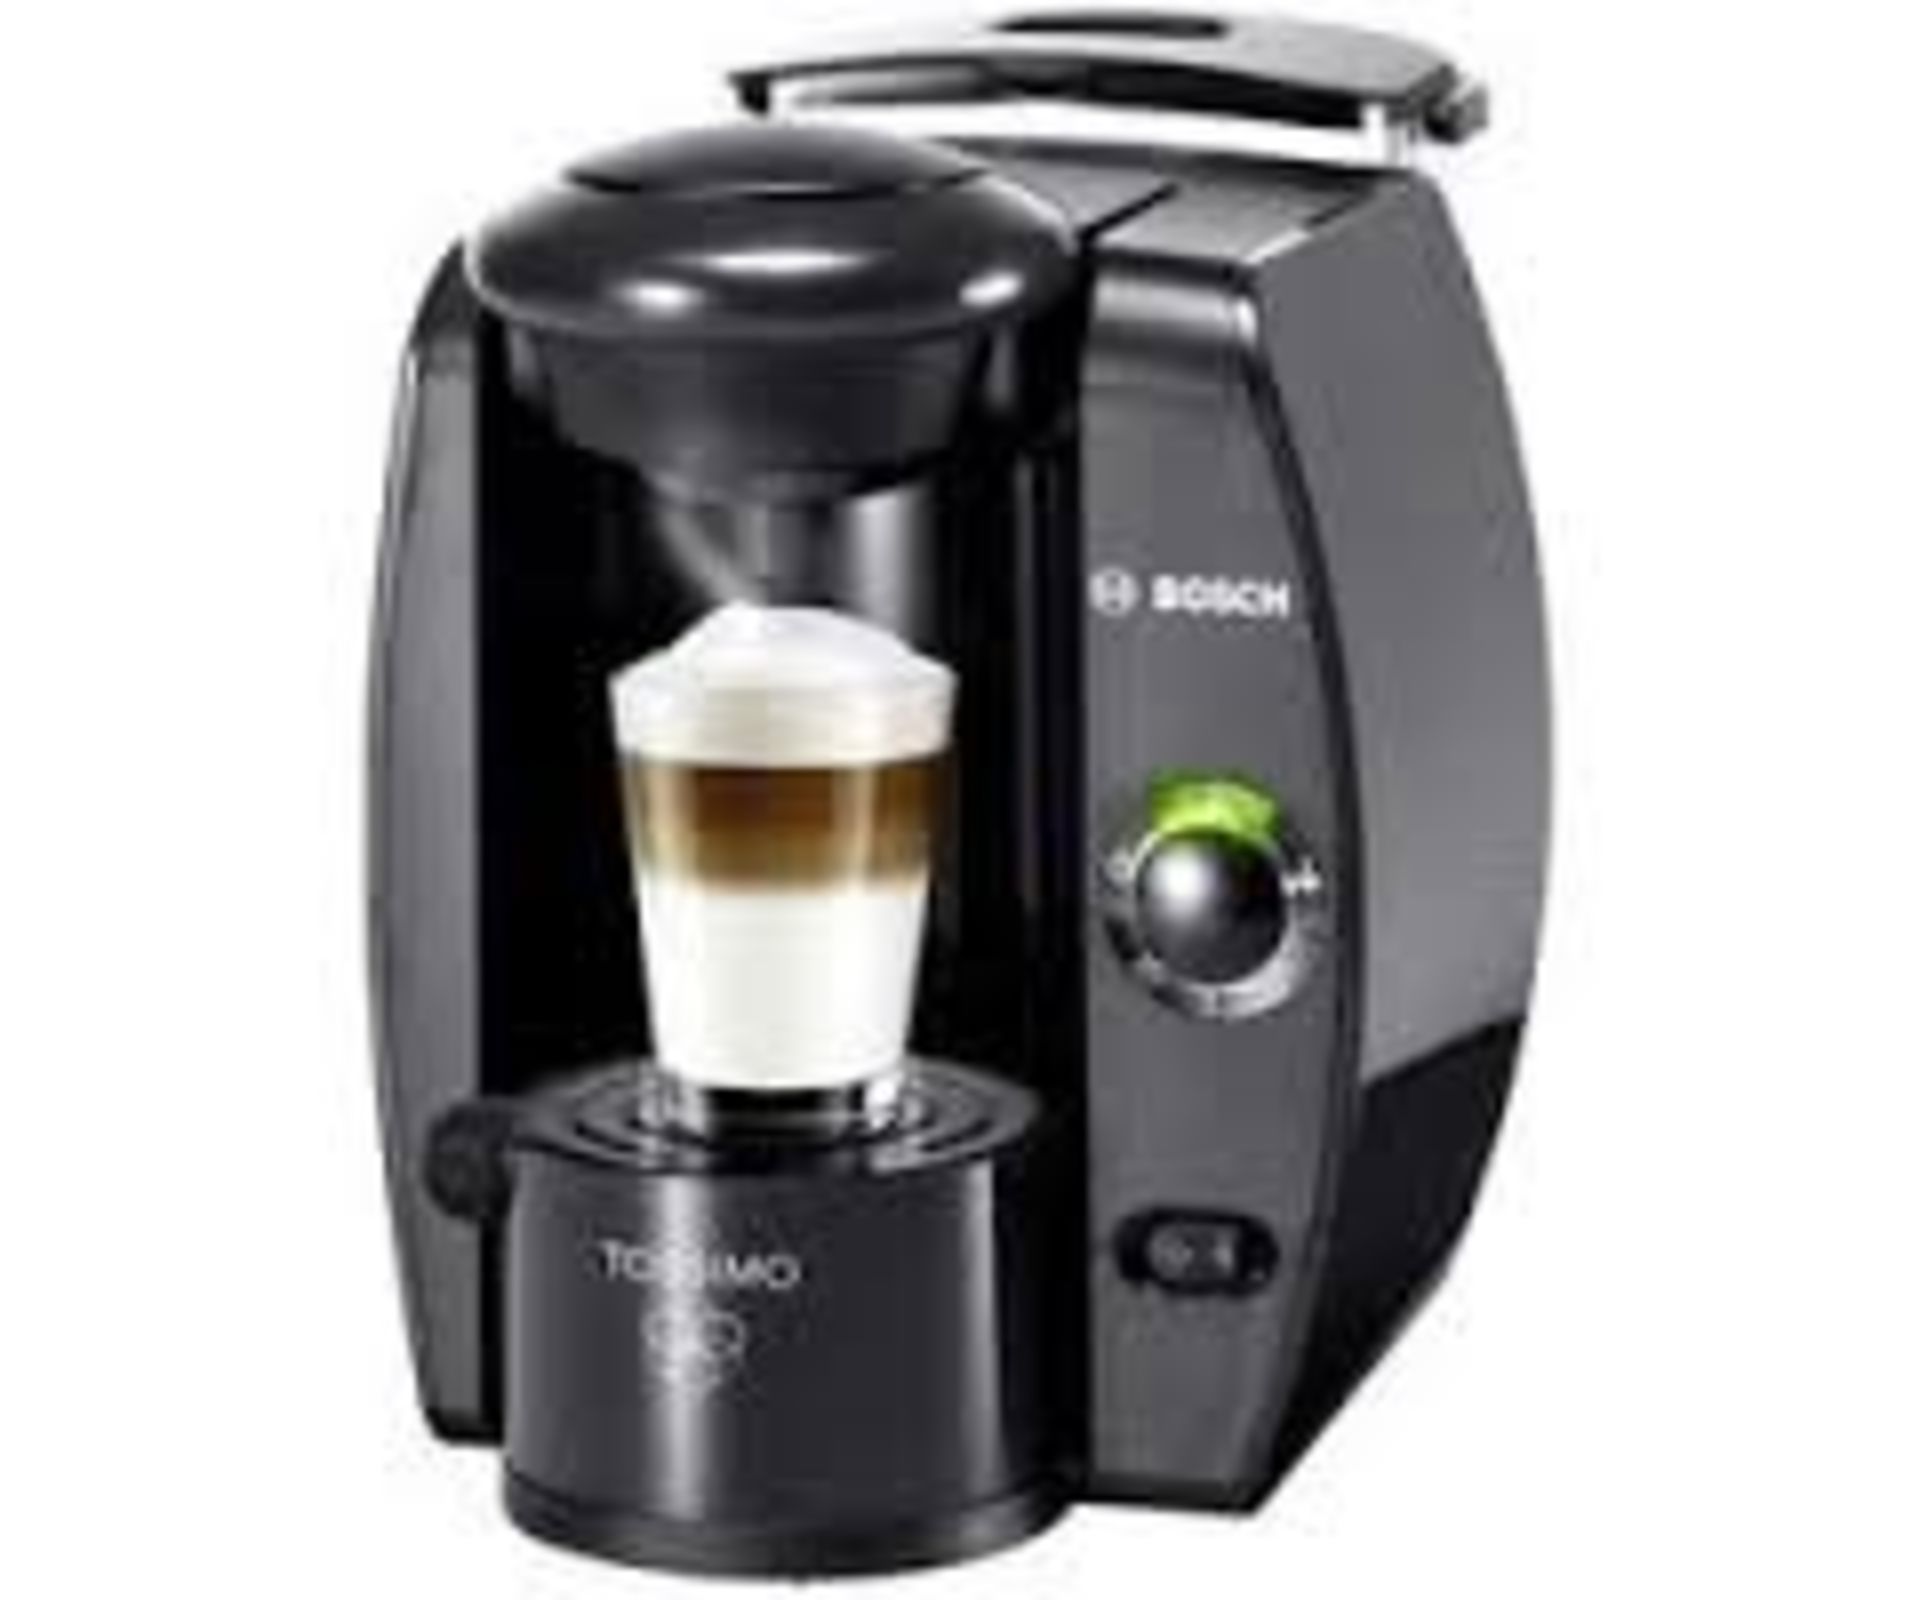 V *TRADE QTY* Grade A Bosch Tassimo 4000 Hot Beverage Machine Ebay Price £117.01 X 10 Bid price to